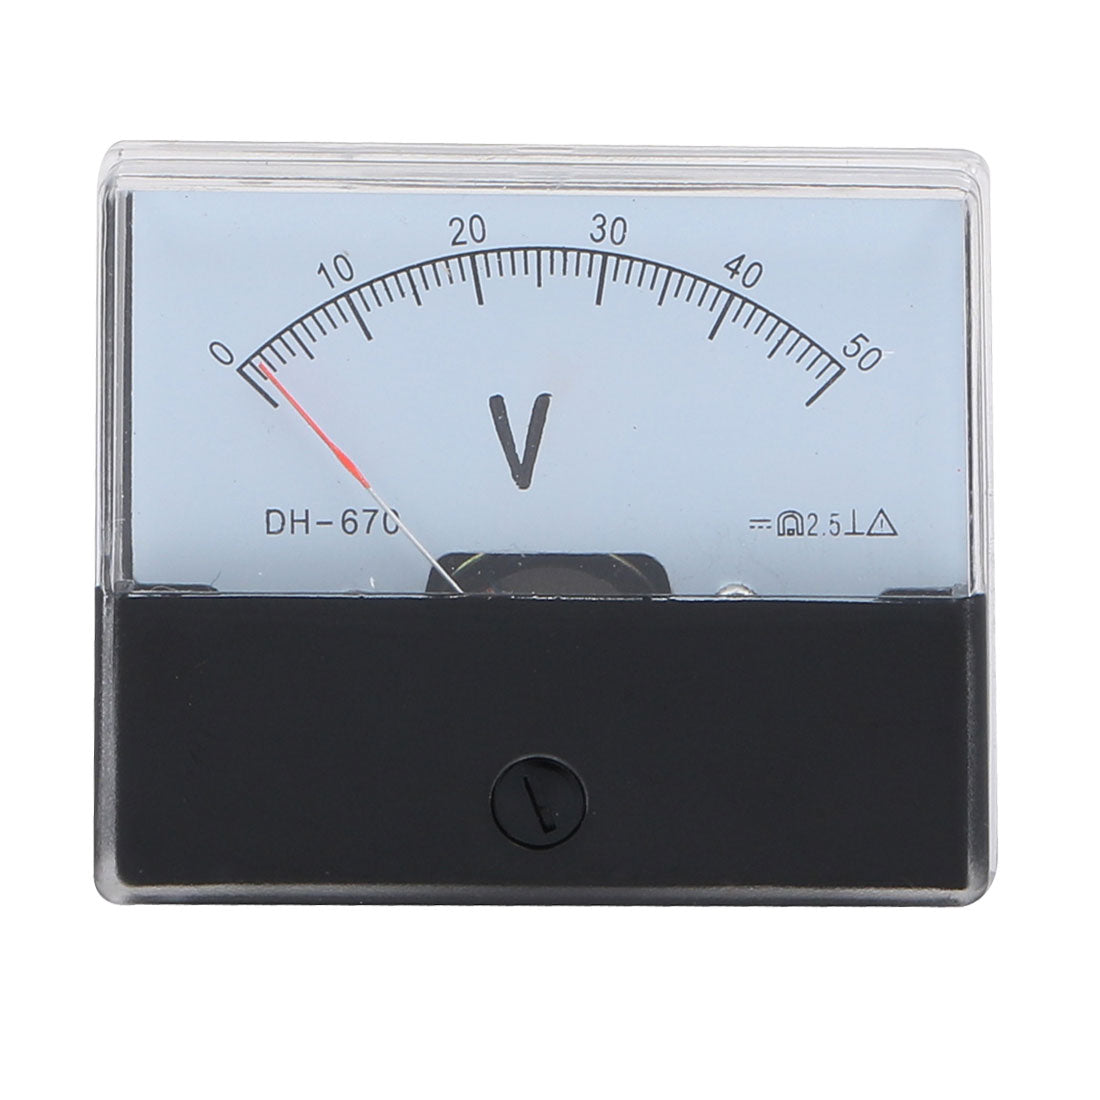 uxcell Uxcell DH-670 DC 0-50V Rectangular Analog Volt Voltage Needle Panel Meter Voltmeter